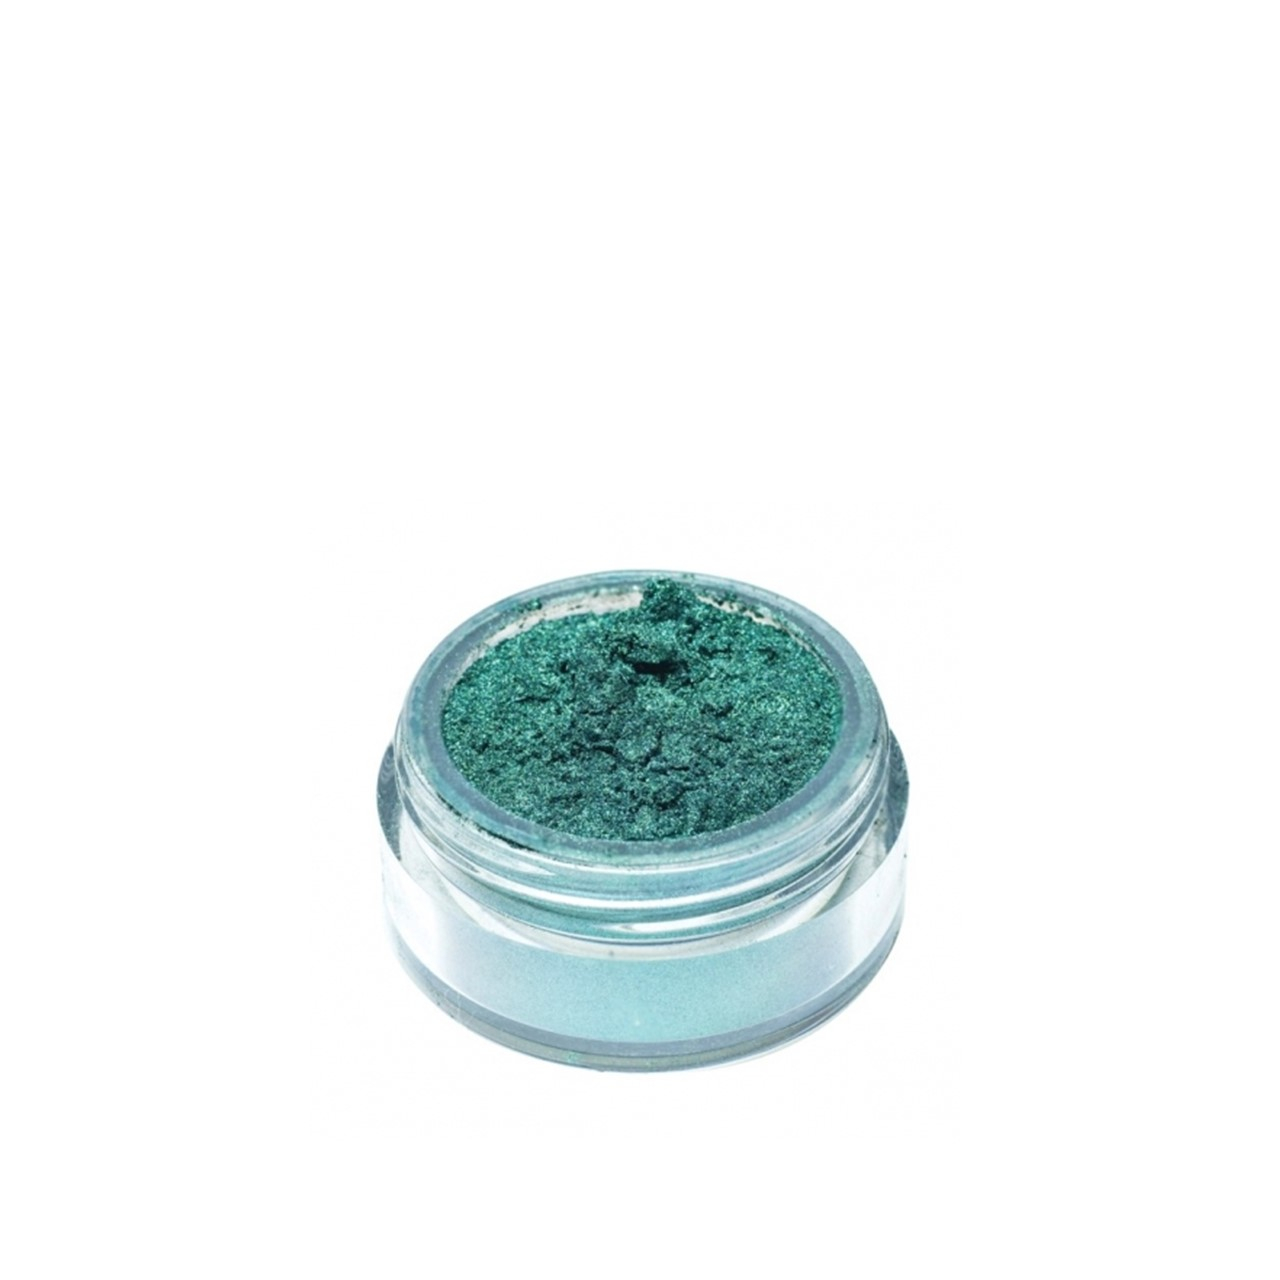 Neve Cosmetics Mineral Eyeshadow Costa Smeralda 2g (0.07 fl oz)